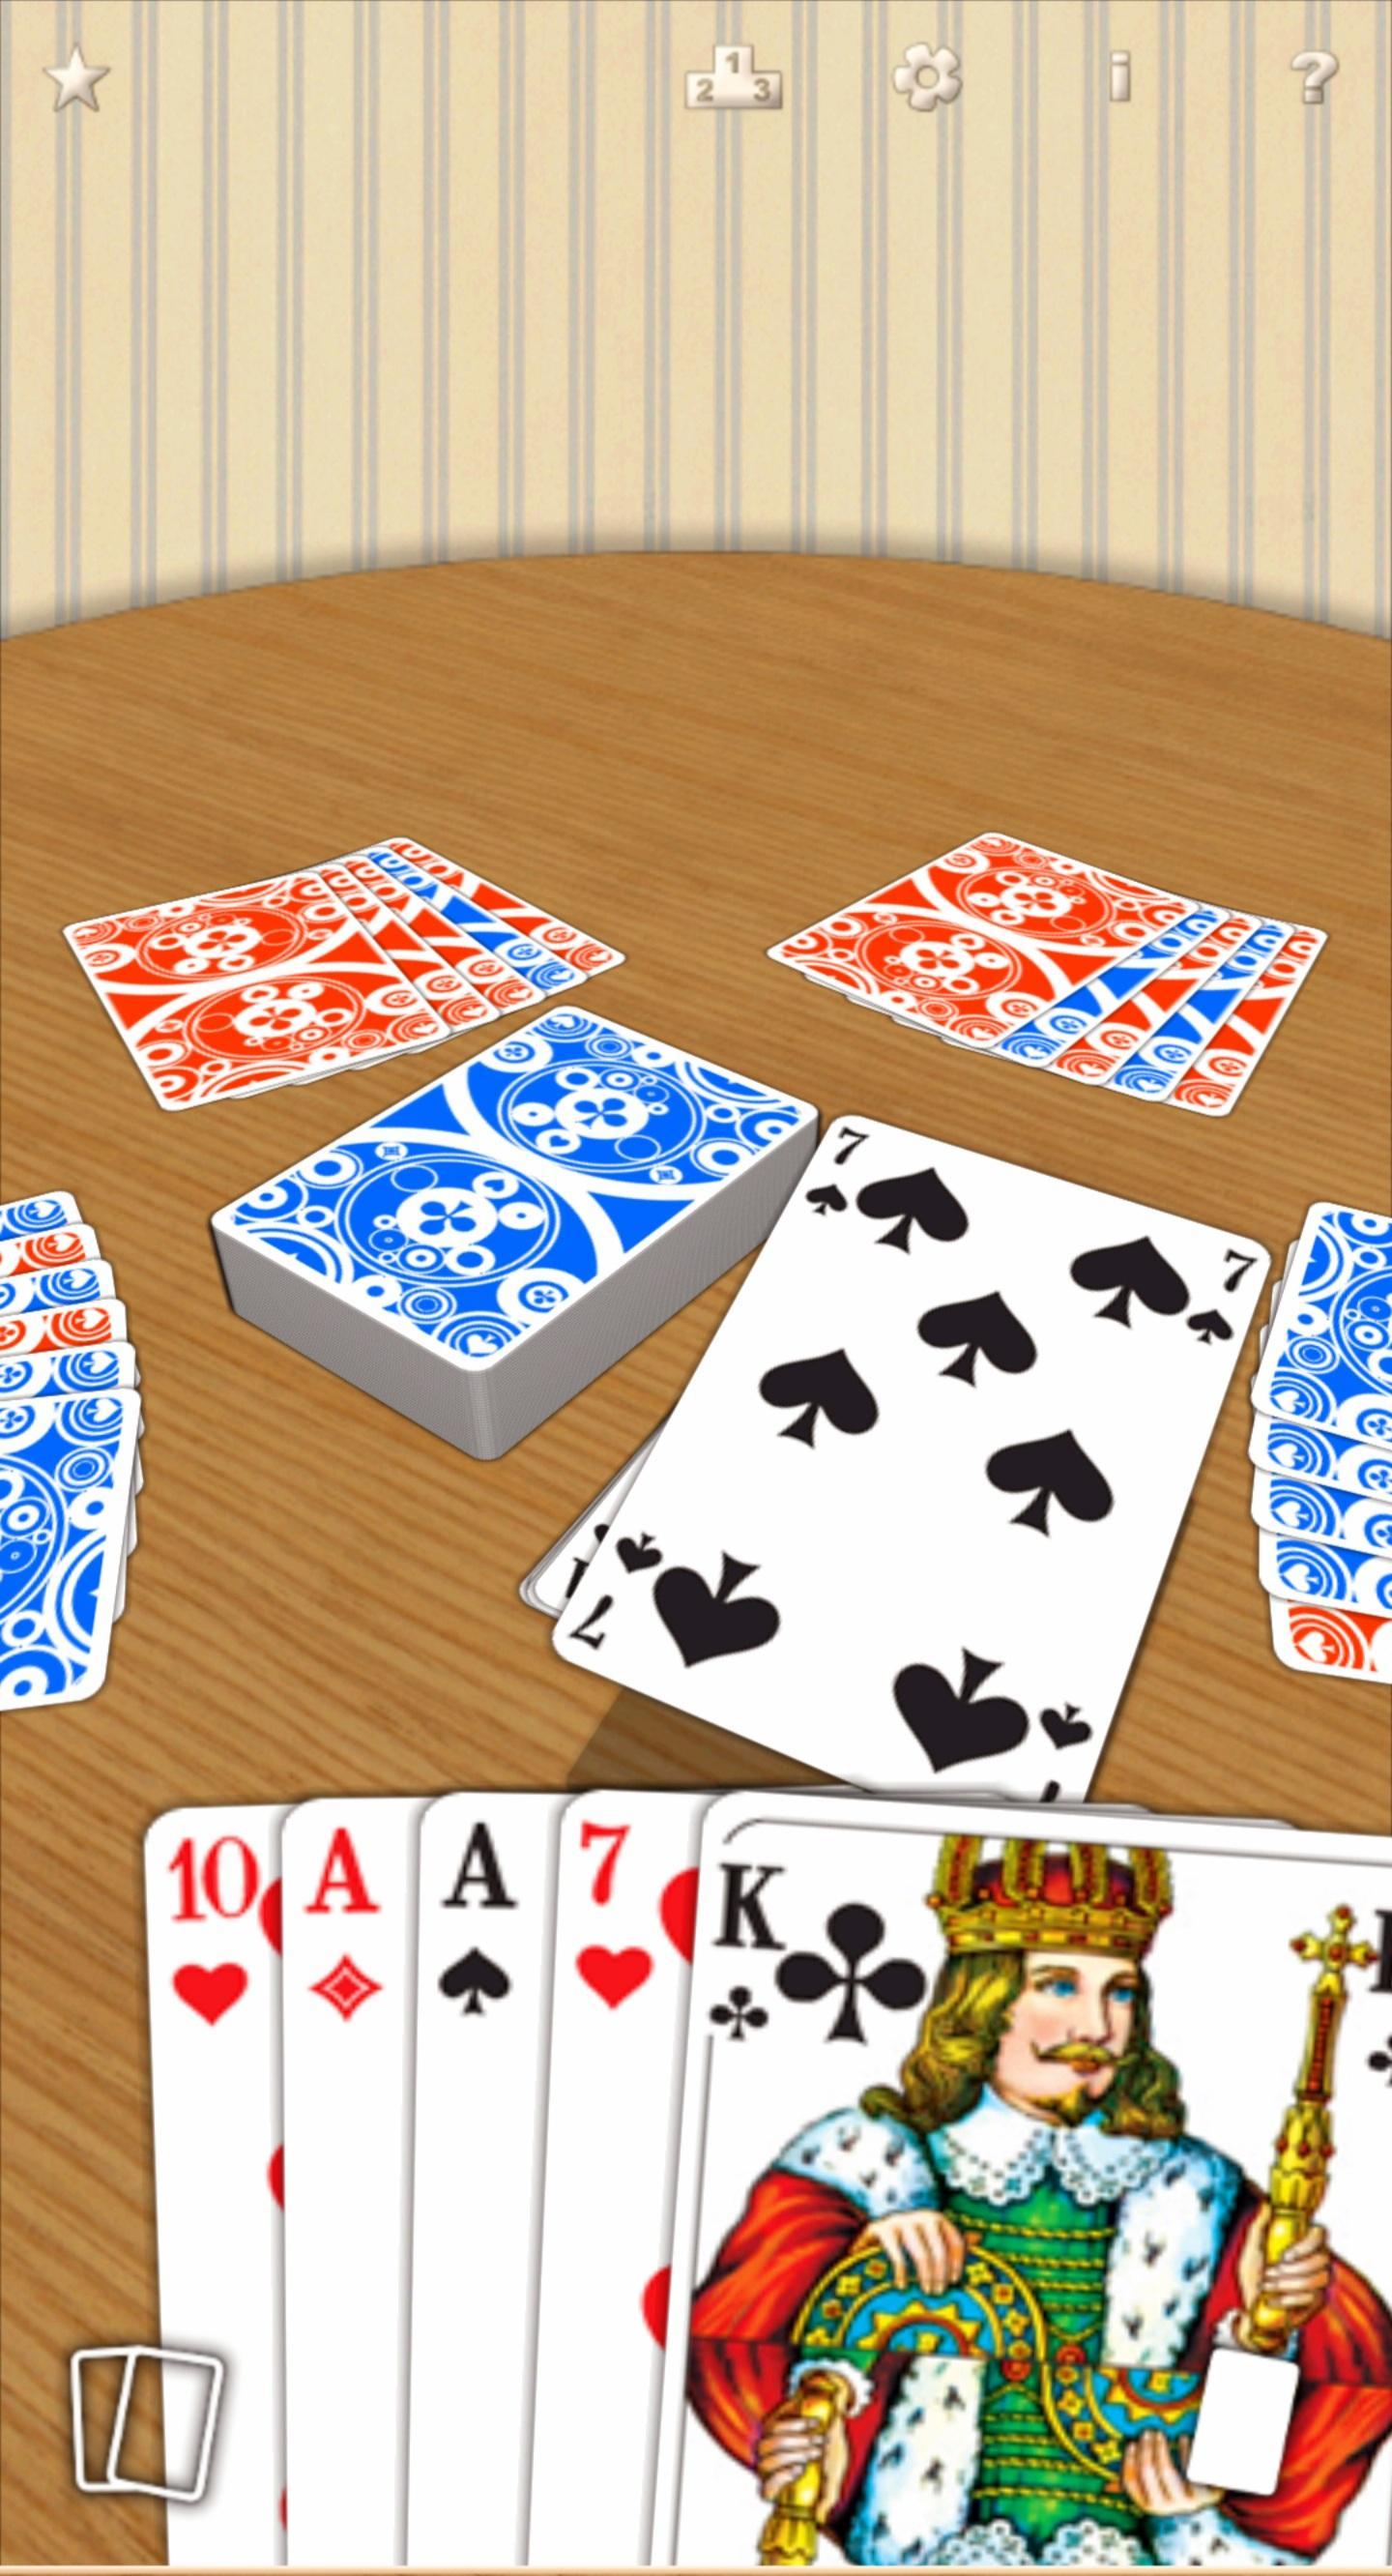 Crazy Eights free card game 1.6.96 Screenshot 21